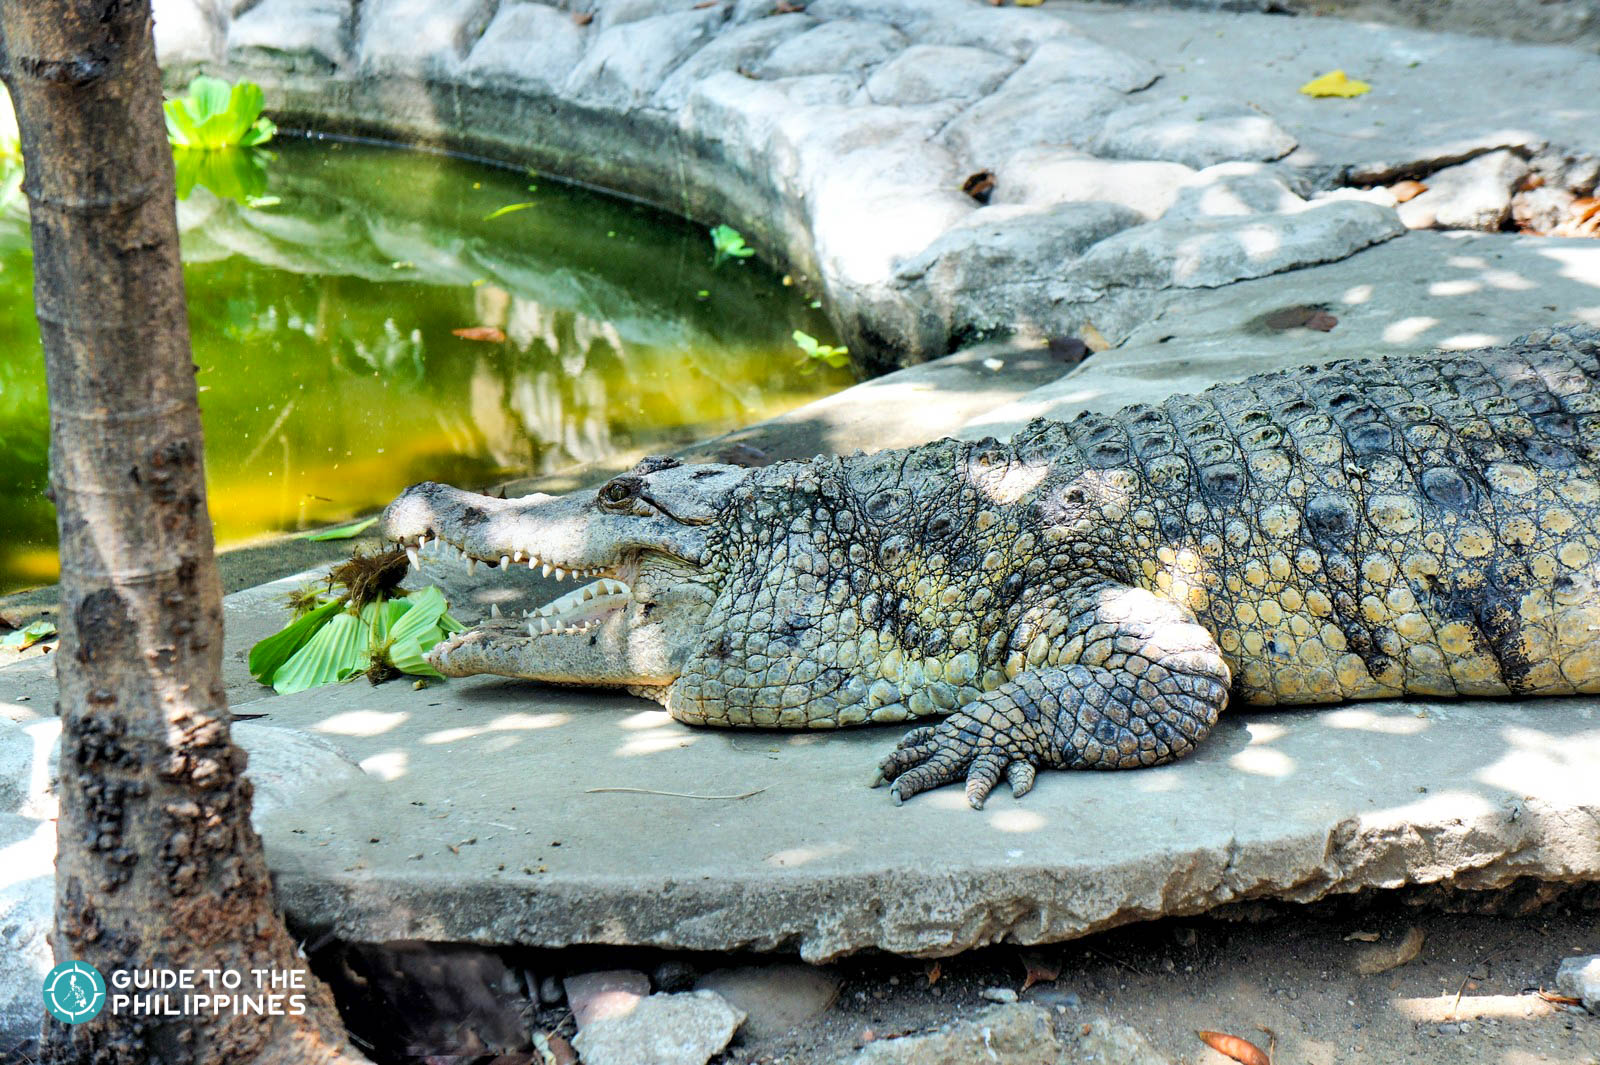 Crocodile Farm in Puerto Princesa, Palawan